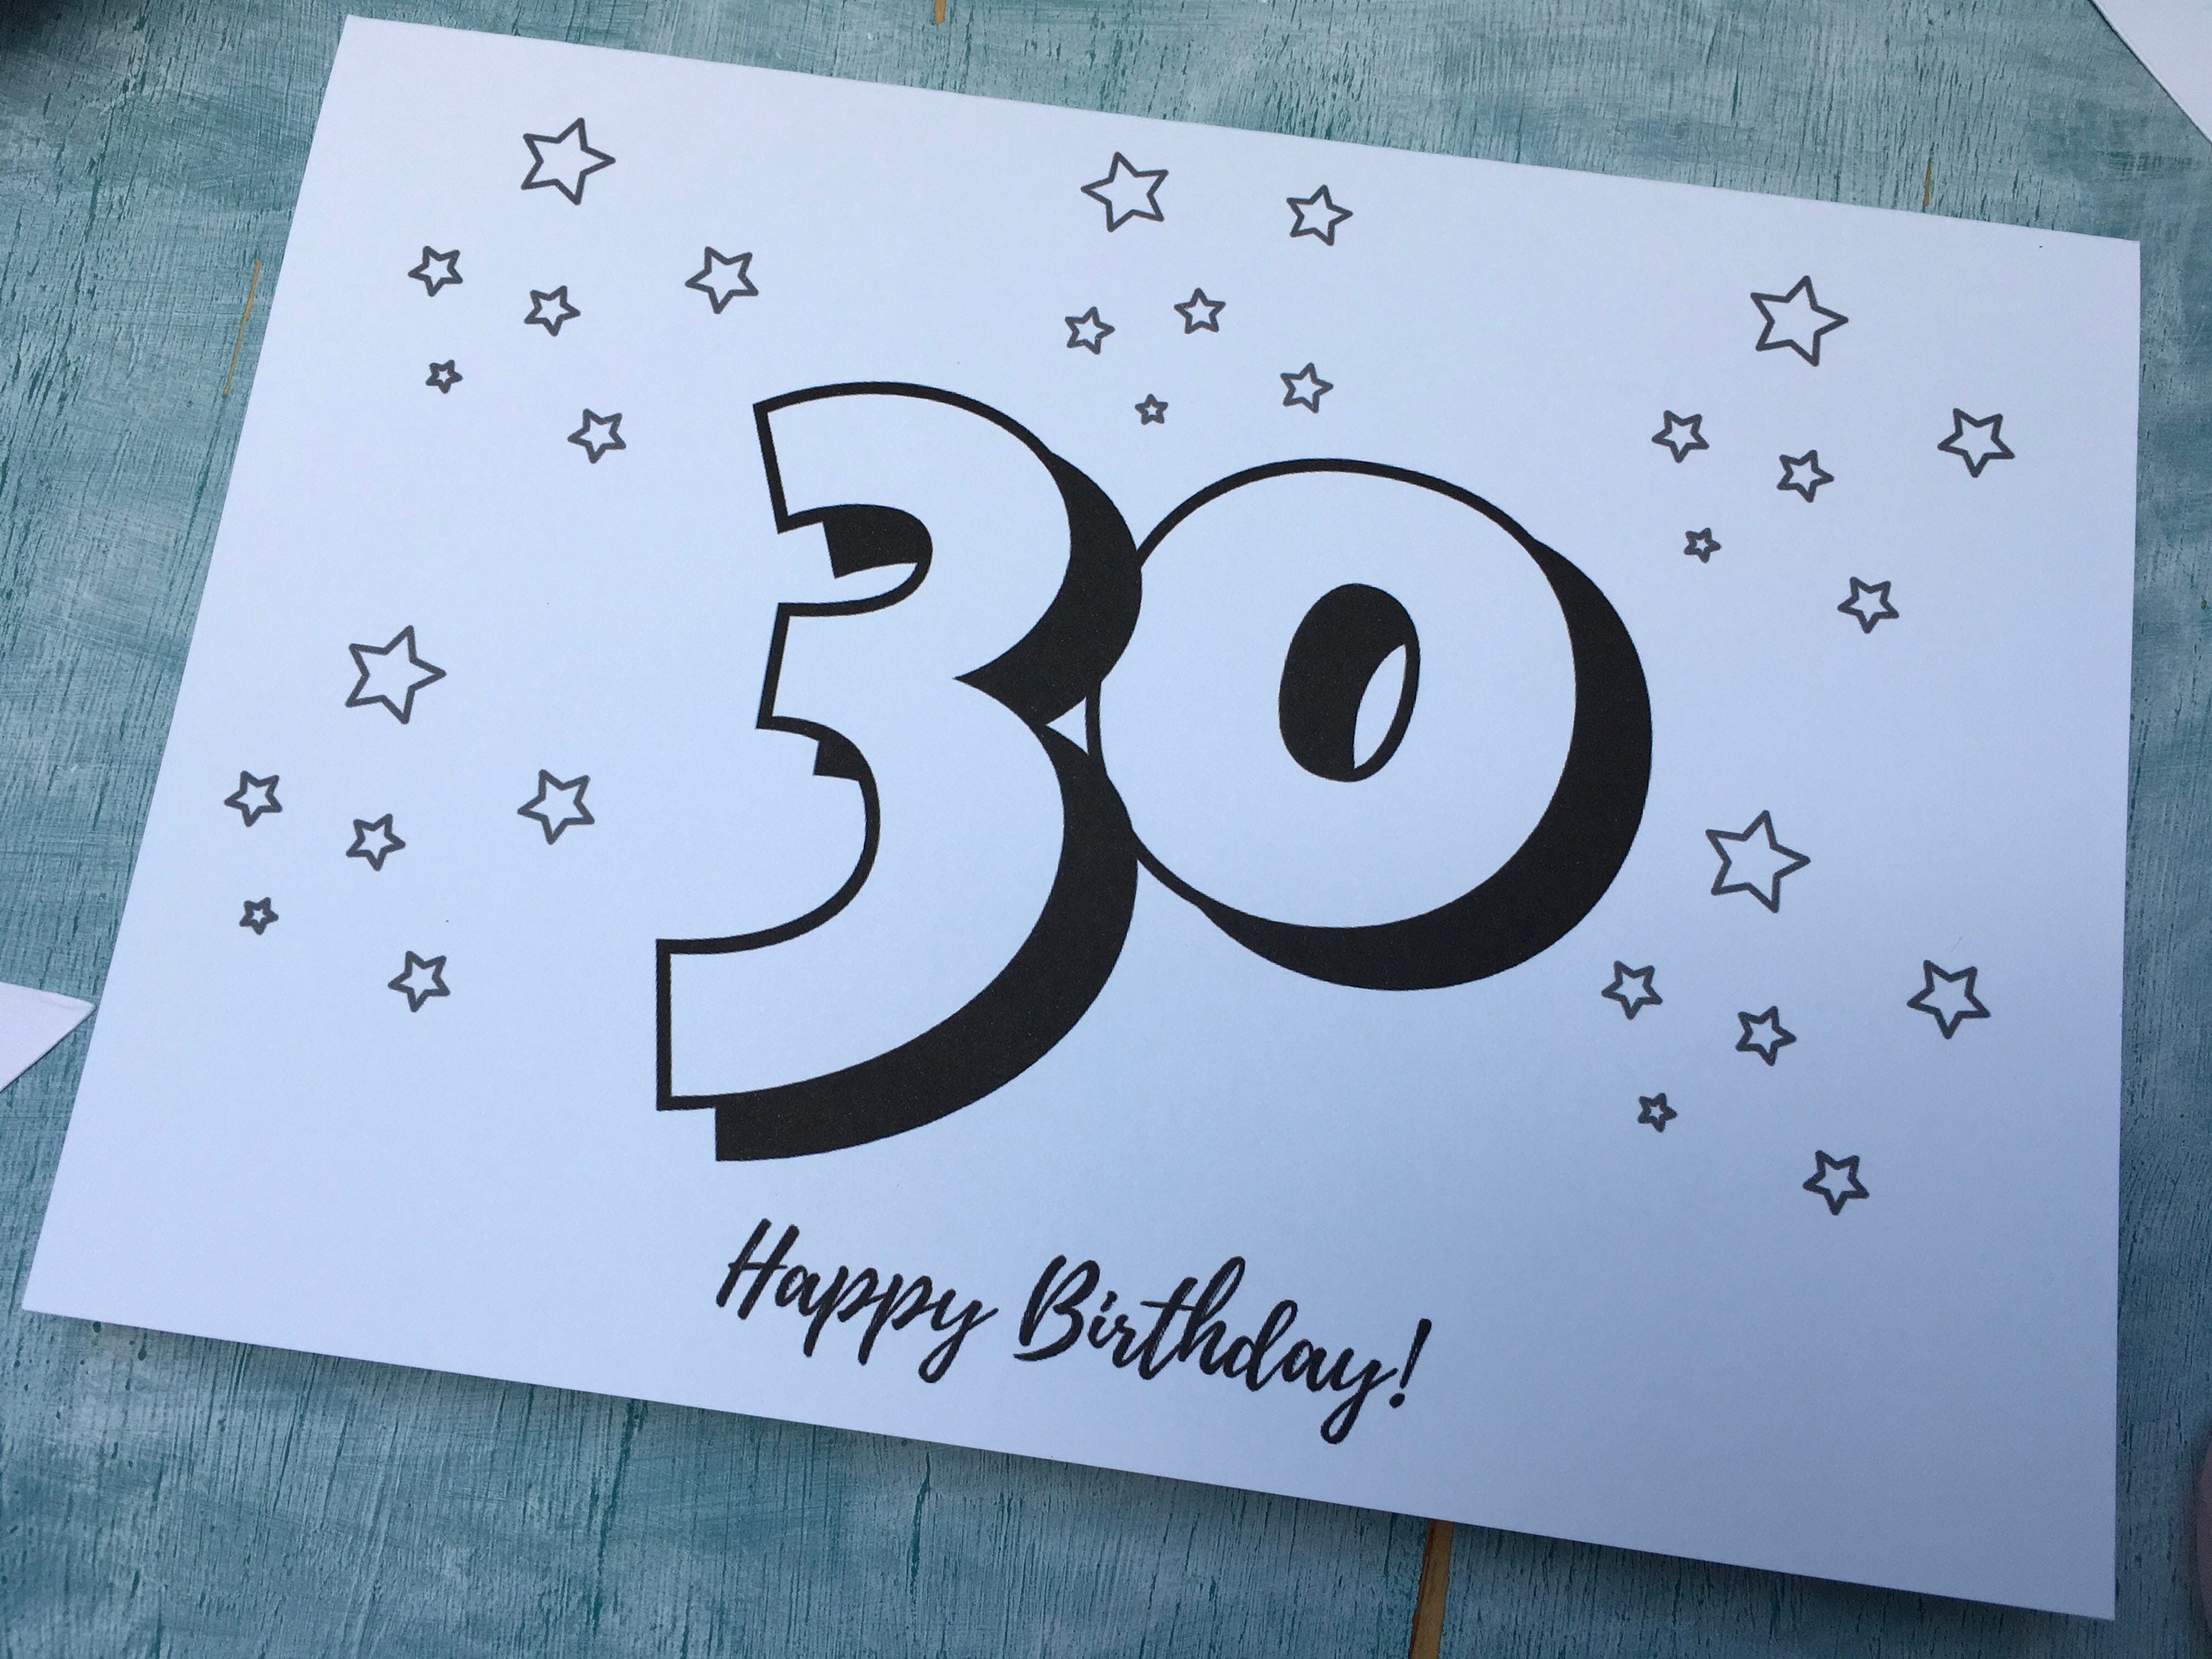 30th birthday cards free greetings island - happy 30th birthday ...